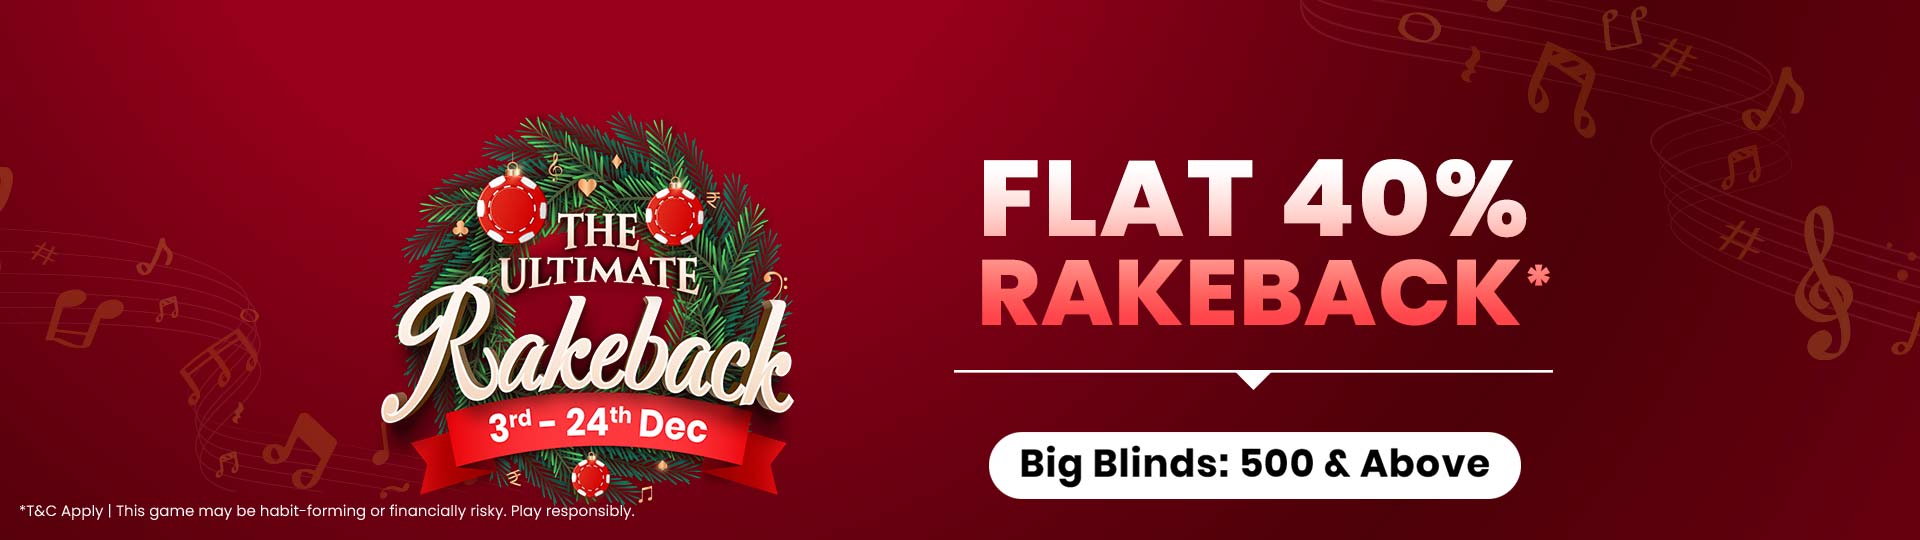 Adda52|Online|Poker|The Ultimate Rakeback|December